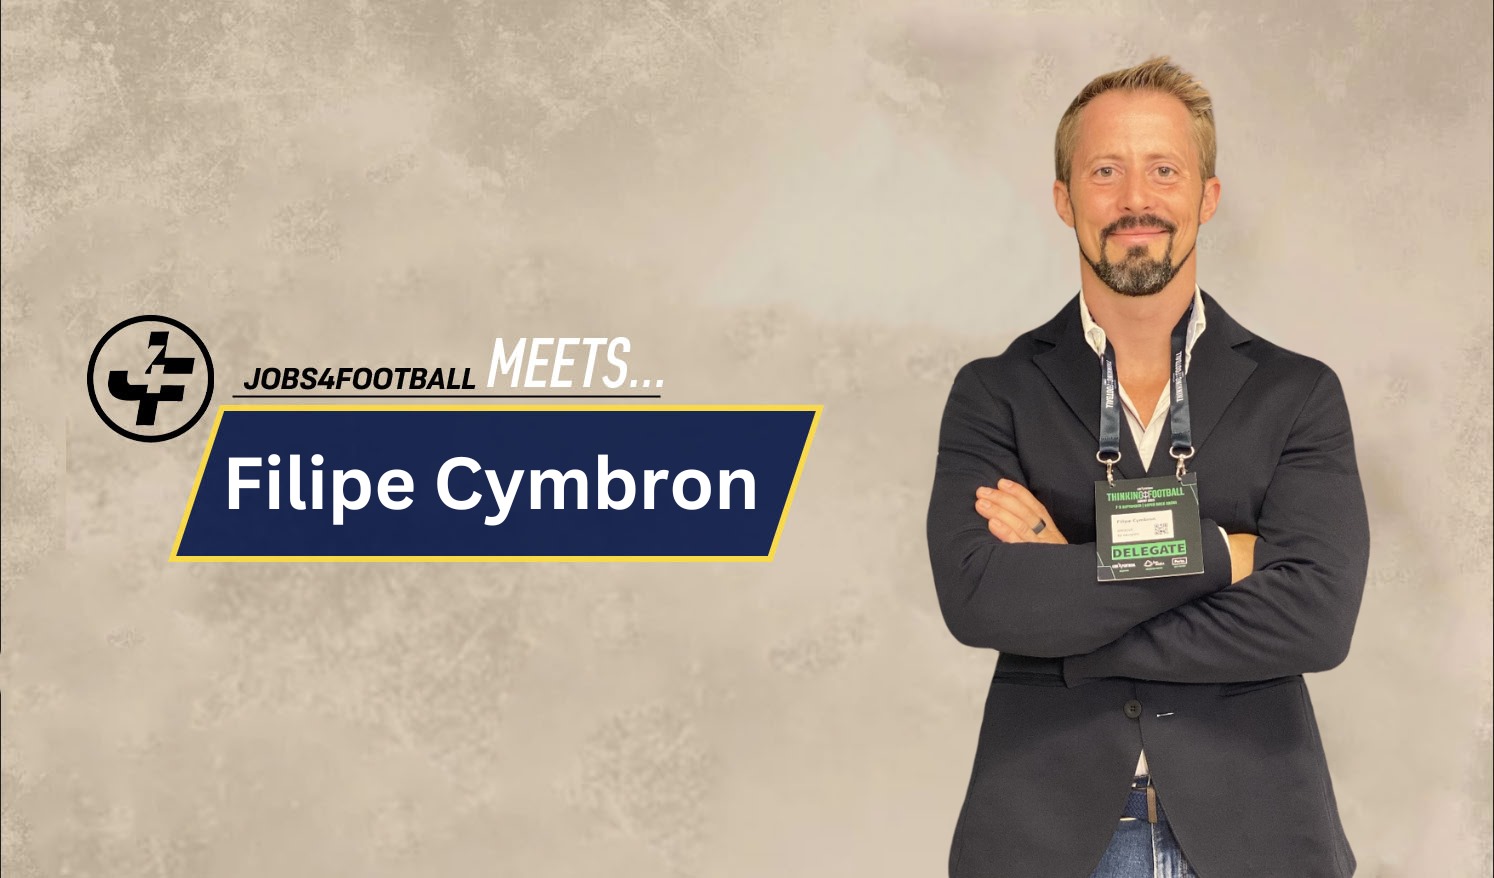 Filipe Cymbron meets Jobs4football